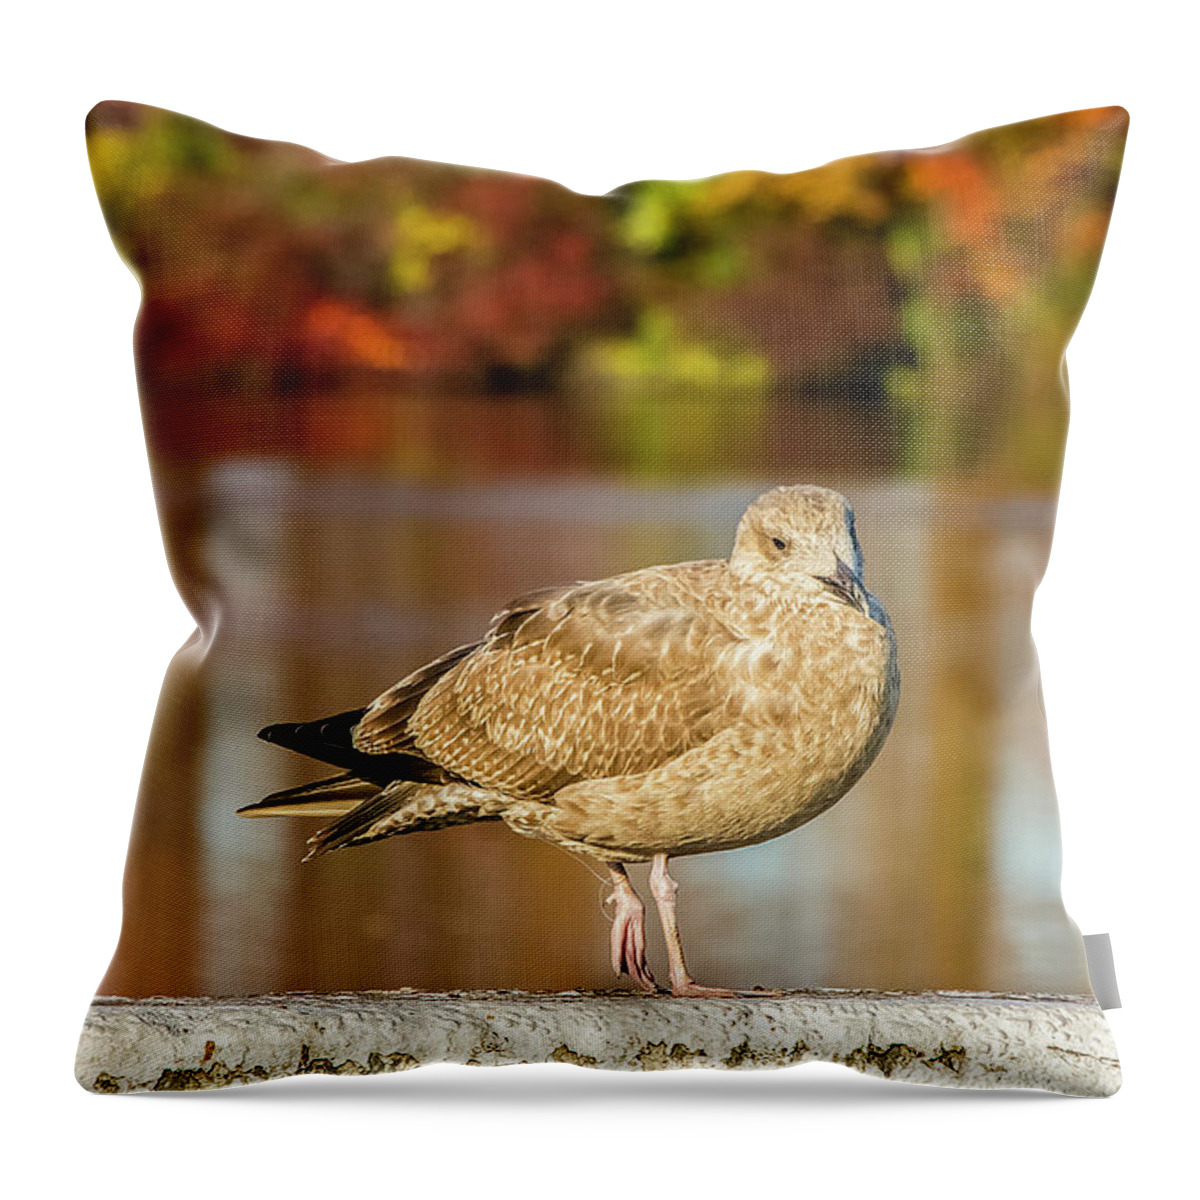 Autumn Throw Pillow featuring the photograph Autumn Bird by Cathy Kovarik